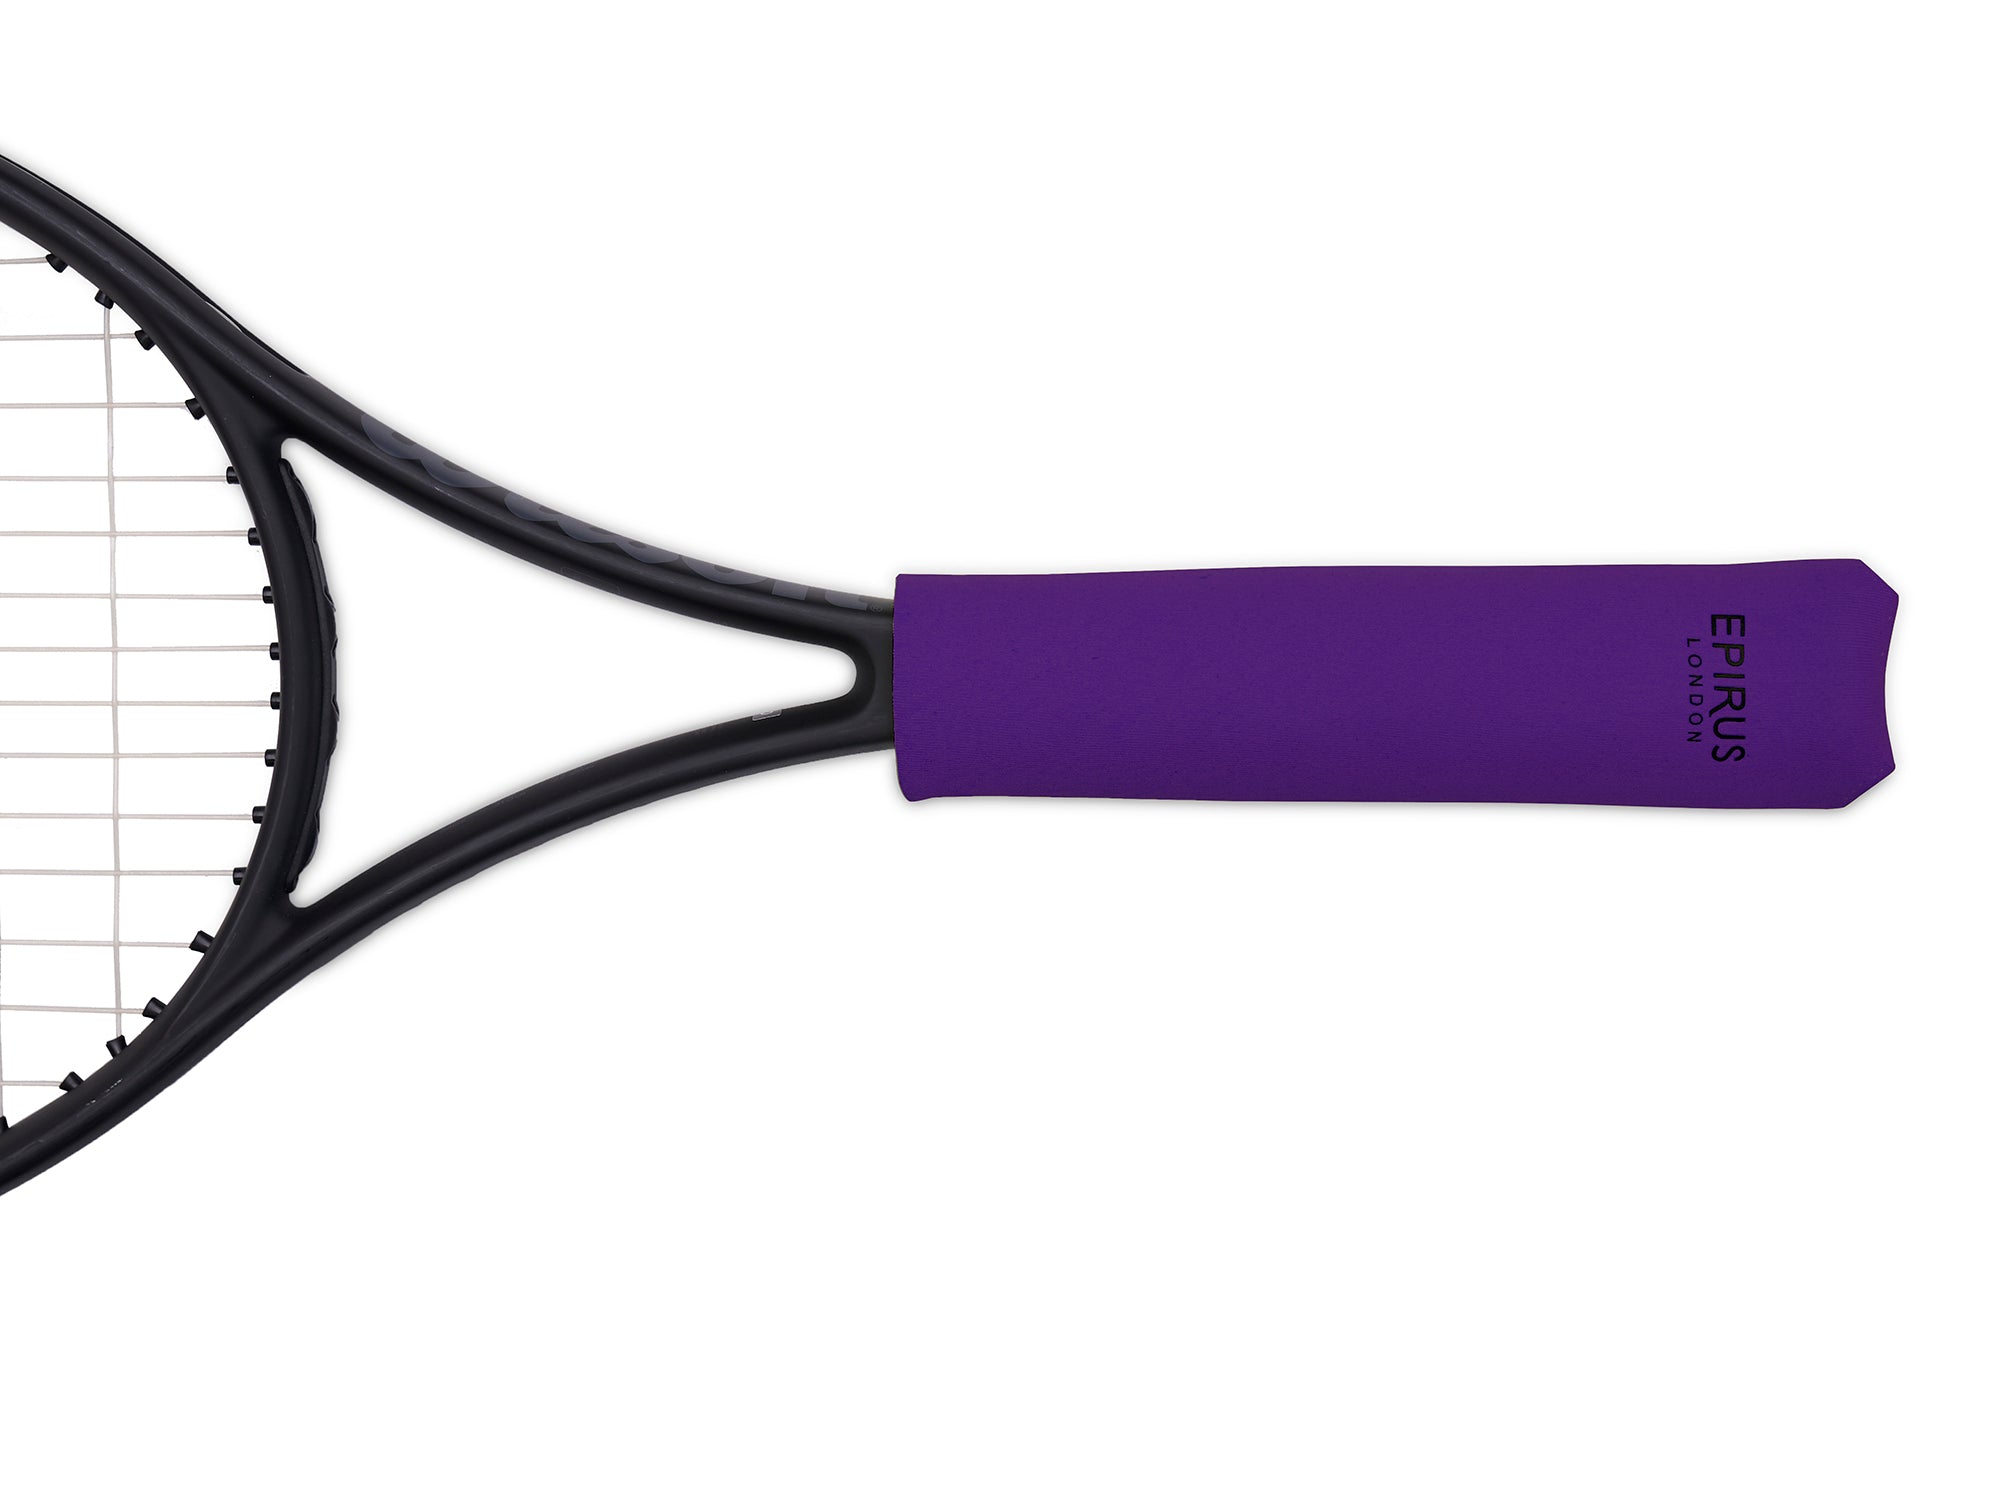 Postcode Eik eenzaam Neoprene Grip Covers | Keep Your Tennis Racket Handles Dry - Epirus London